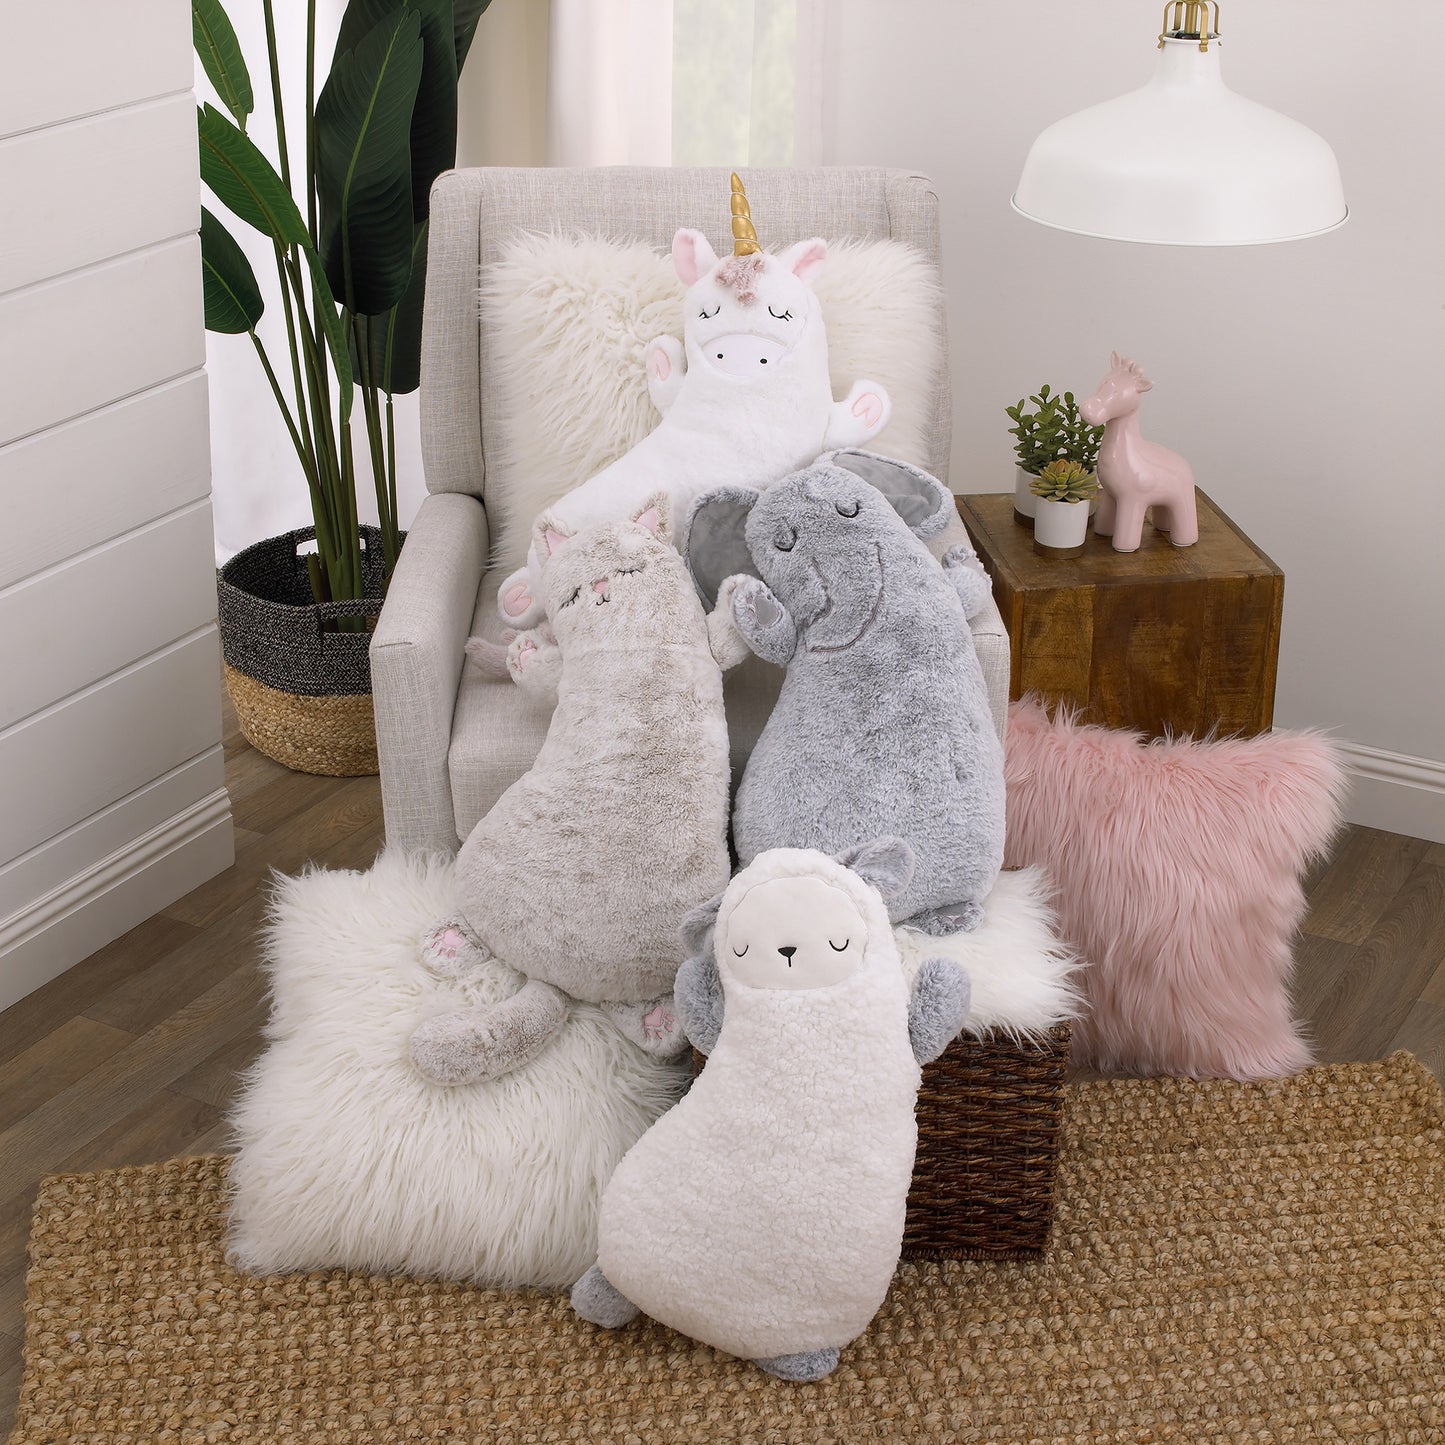 Little Love by NoJo Grey and Charcoal Oversized Sleepy Elephant Plush Stuffed Animal